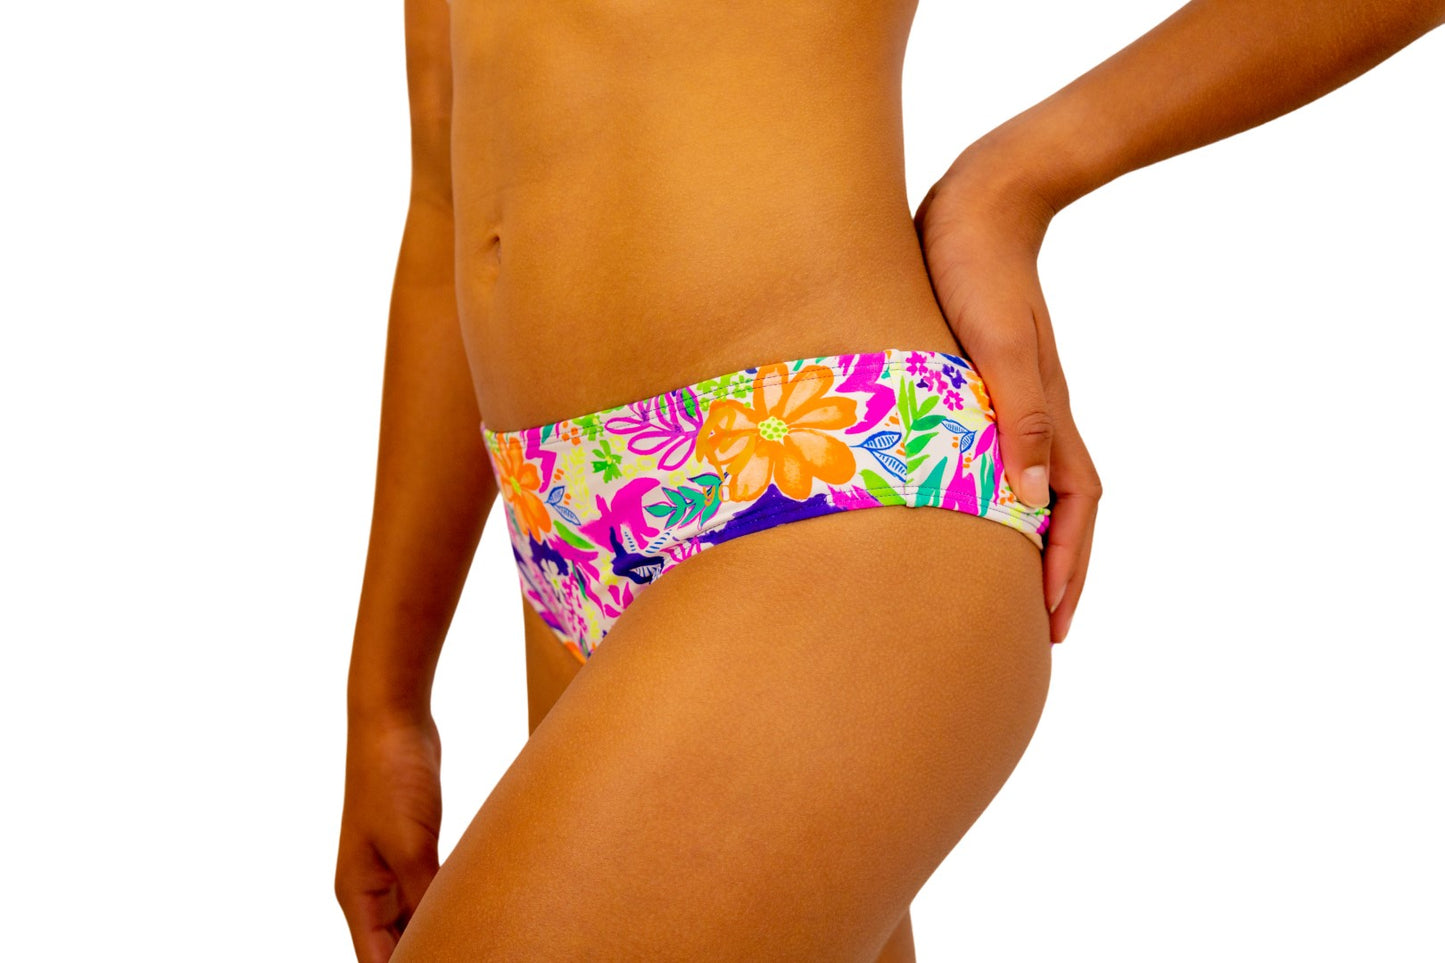 Tropical Print Bikini Bottoms for Girls. Bikini Separates, Swimwear for Girls and Kids. Fluorescent Print, Swimsuit, Swimwear, Togs, Swimming, Beach wear. B you Active, B you Swimwear, B you leotards. Australia